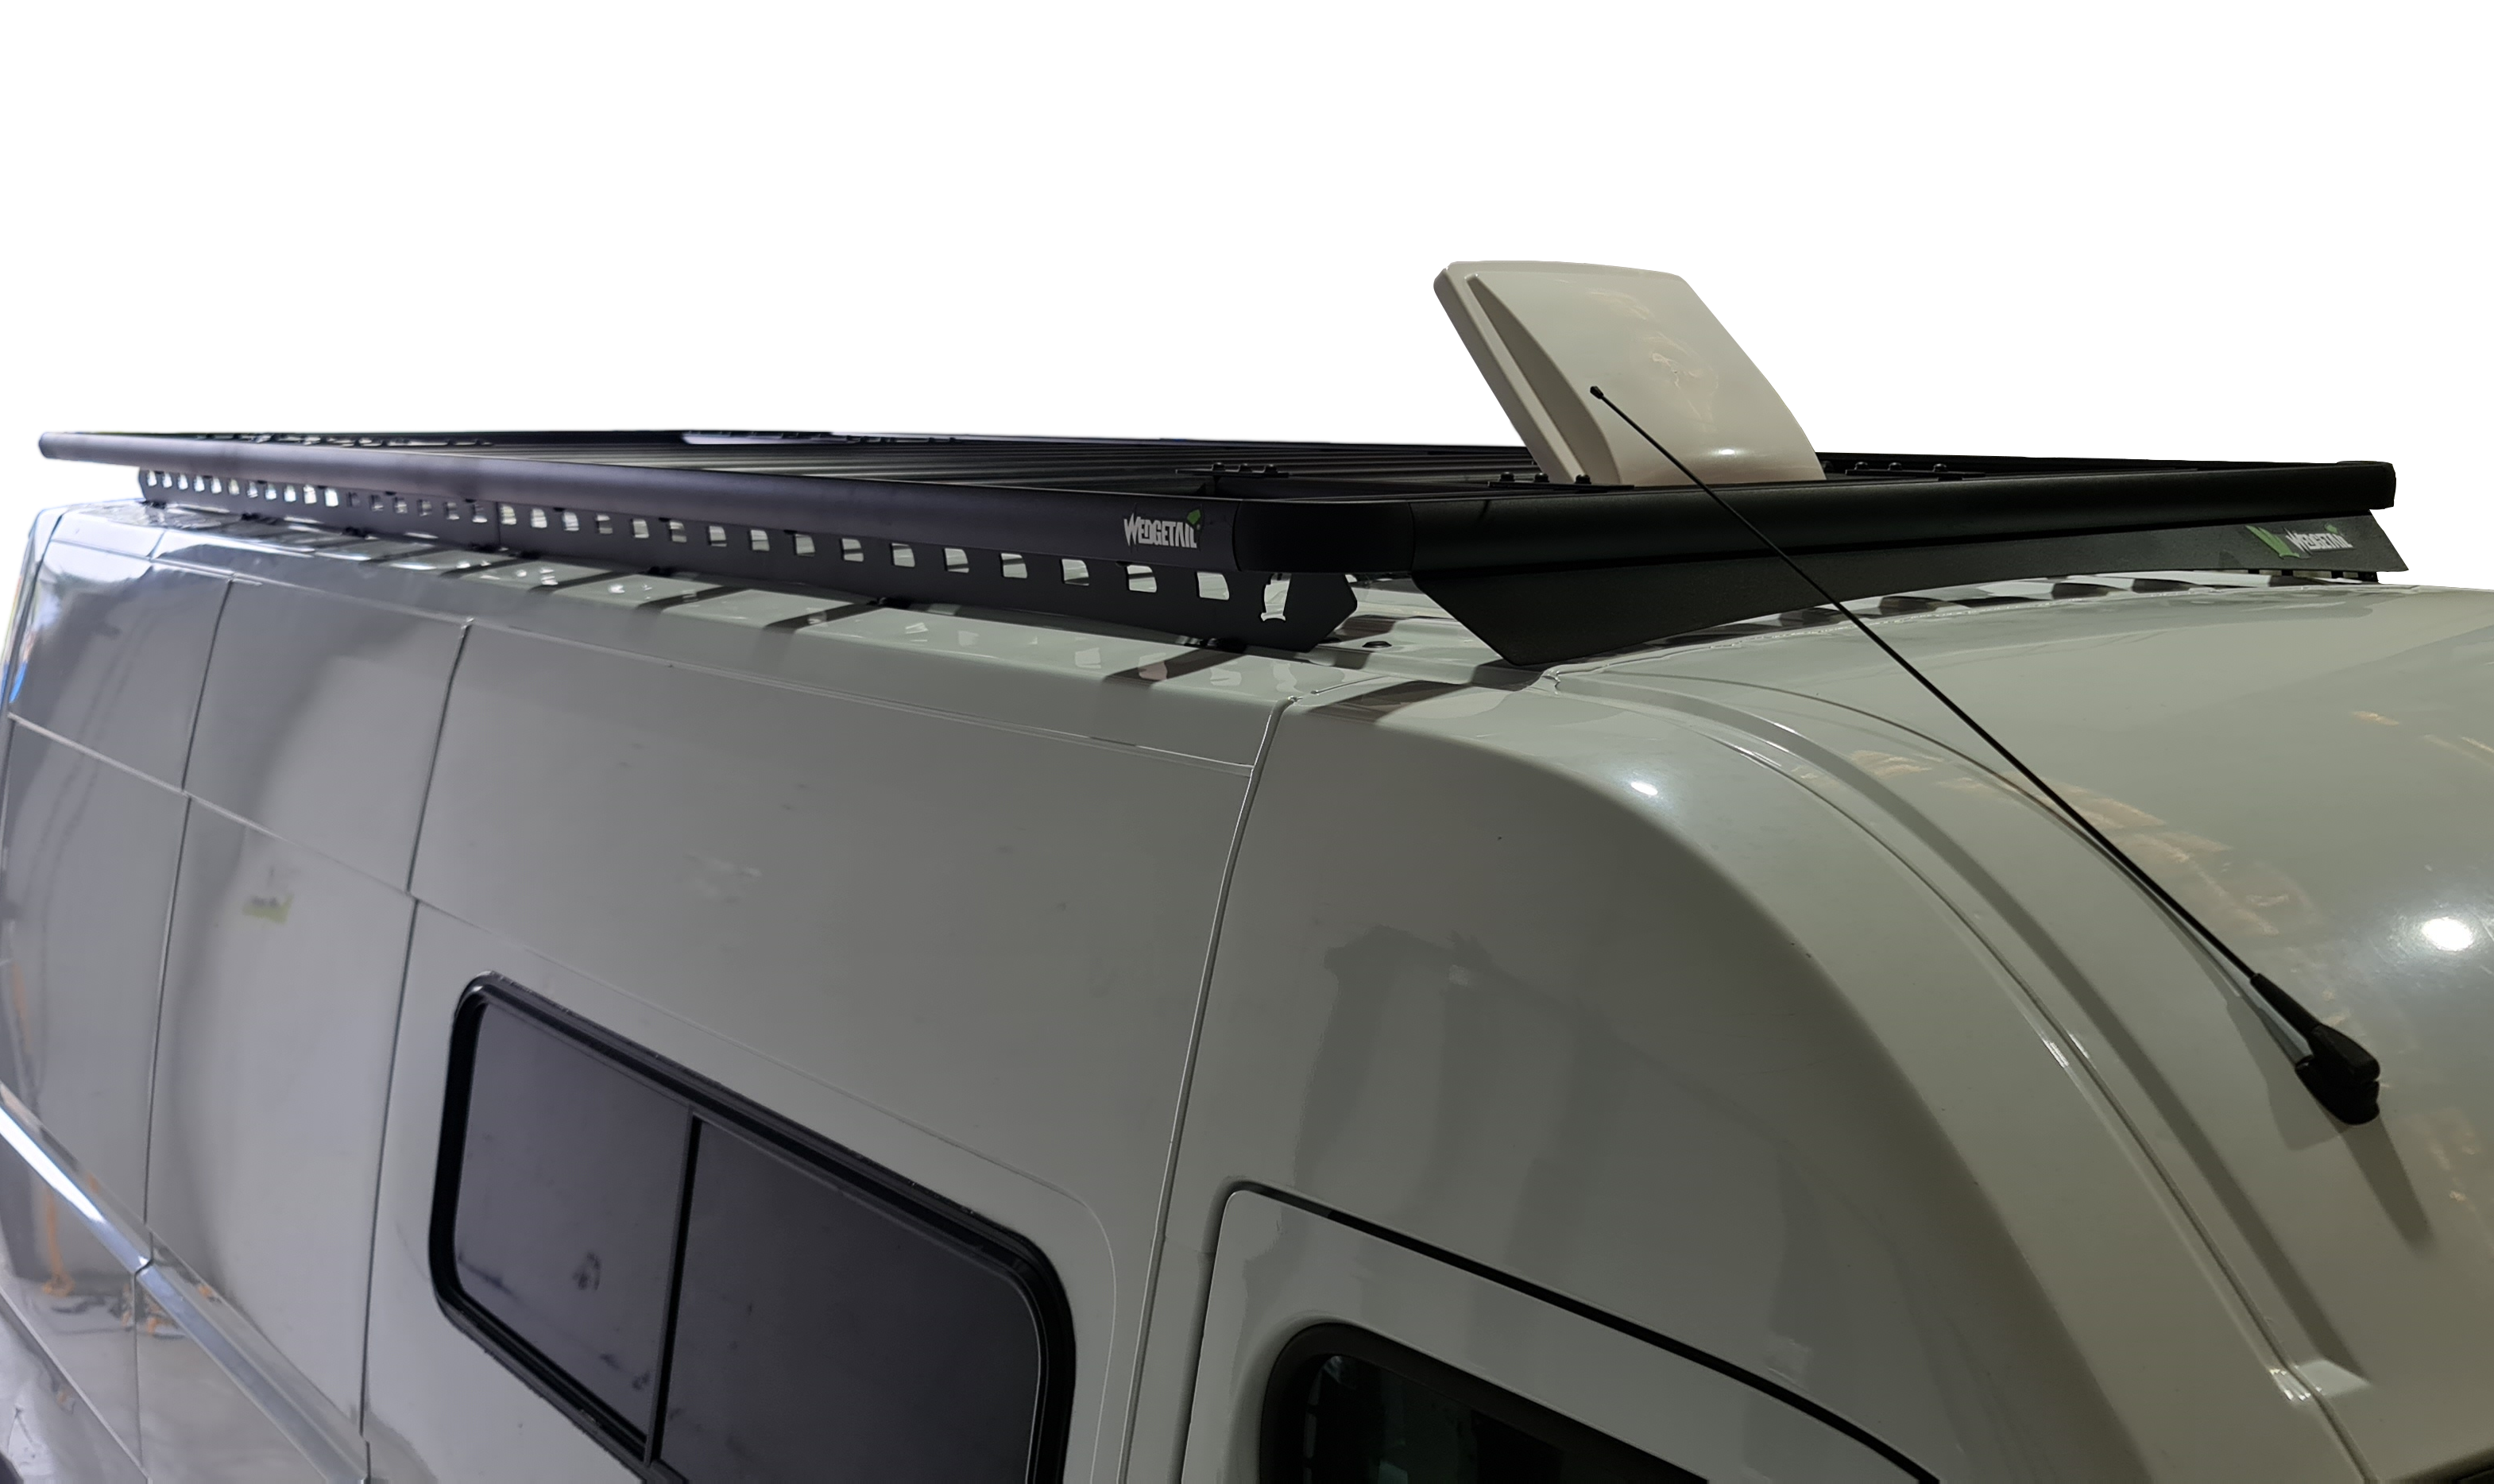 Volkswagen Crafter long wheel base van with a Wedgetail roof rack installed – hero image.